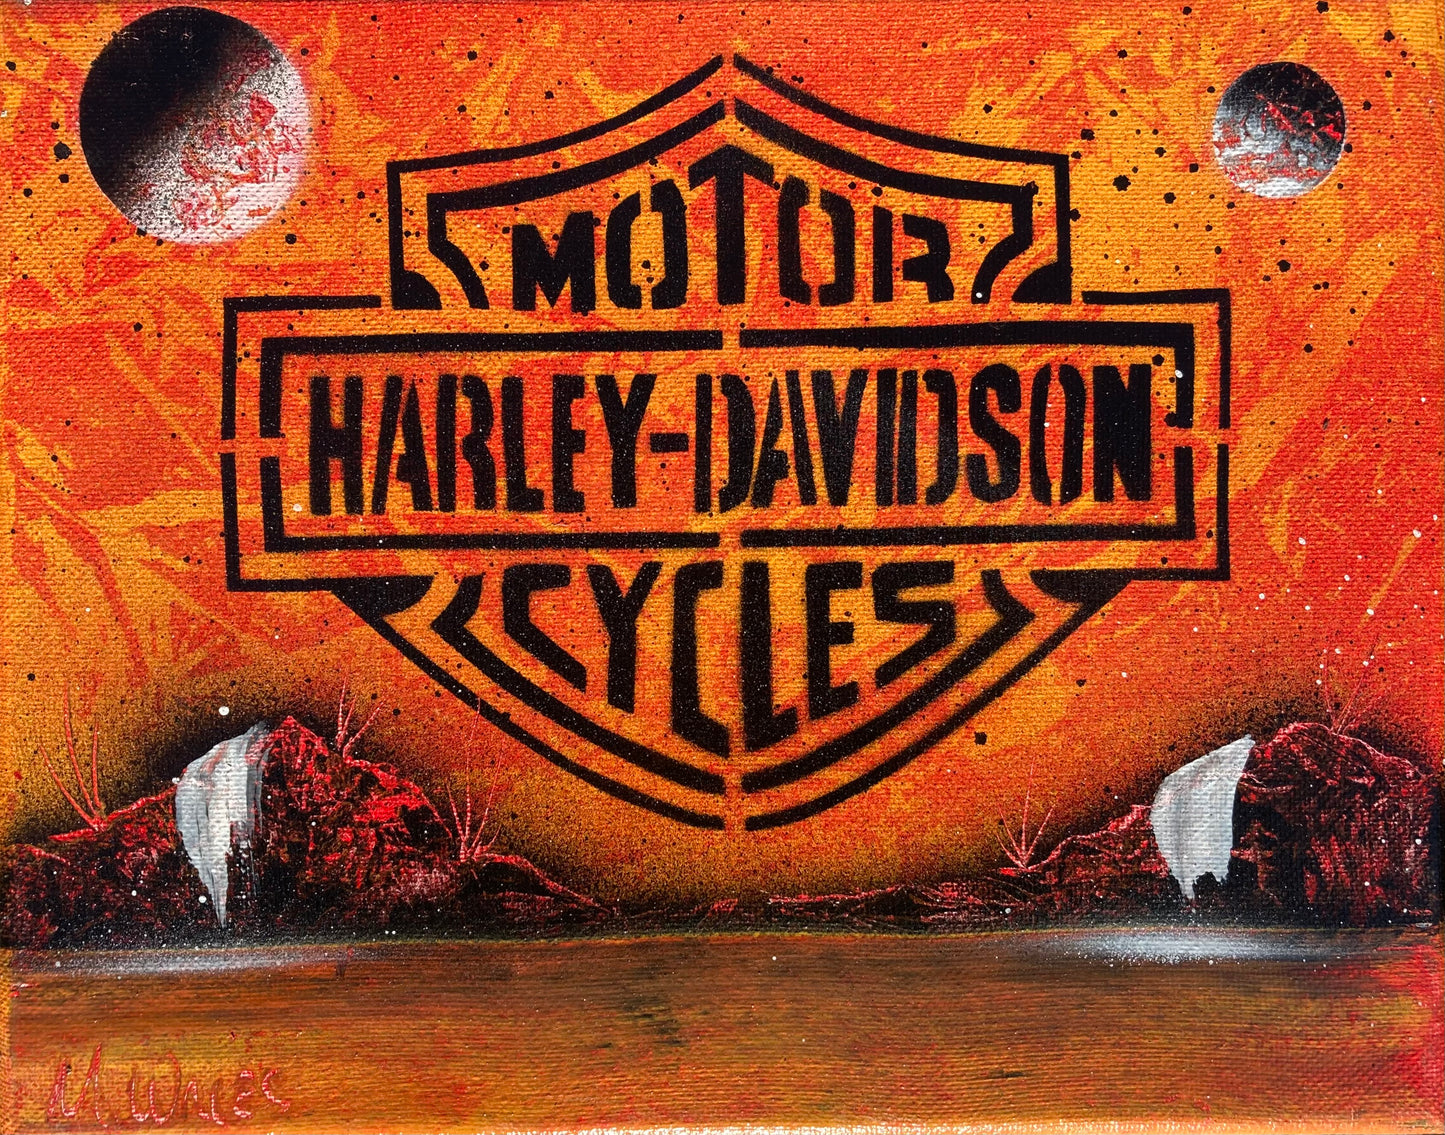 Harley Davidson (A1) Original